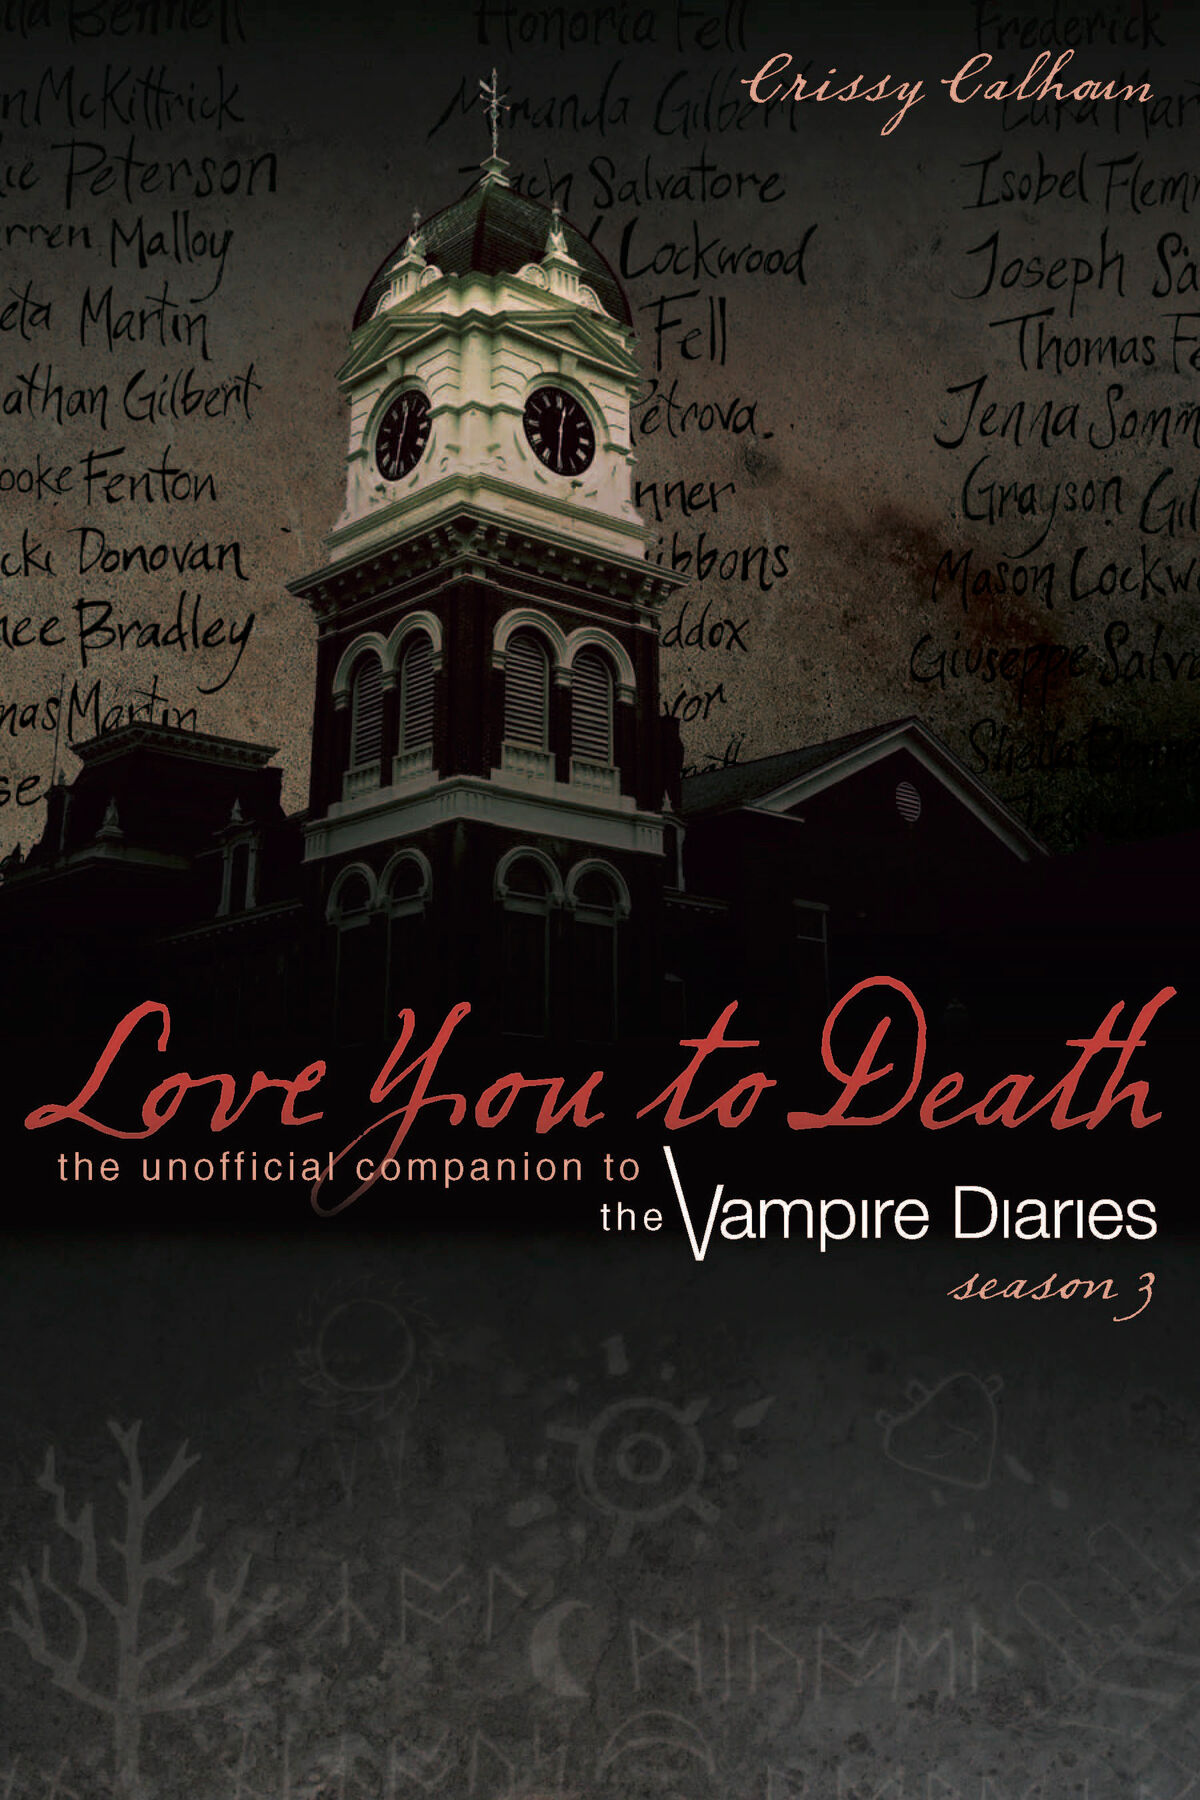 The Vampire Diaries All My Children (TV Episode 2012) - Nathaniel